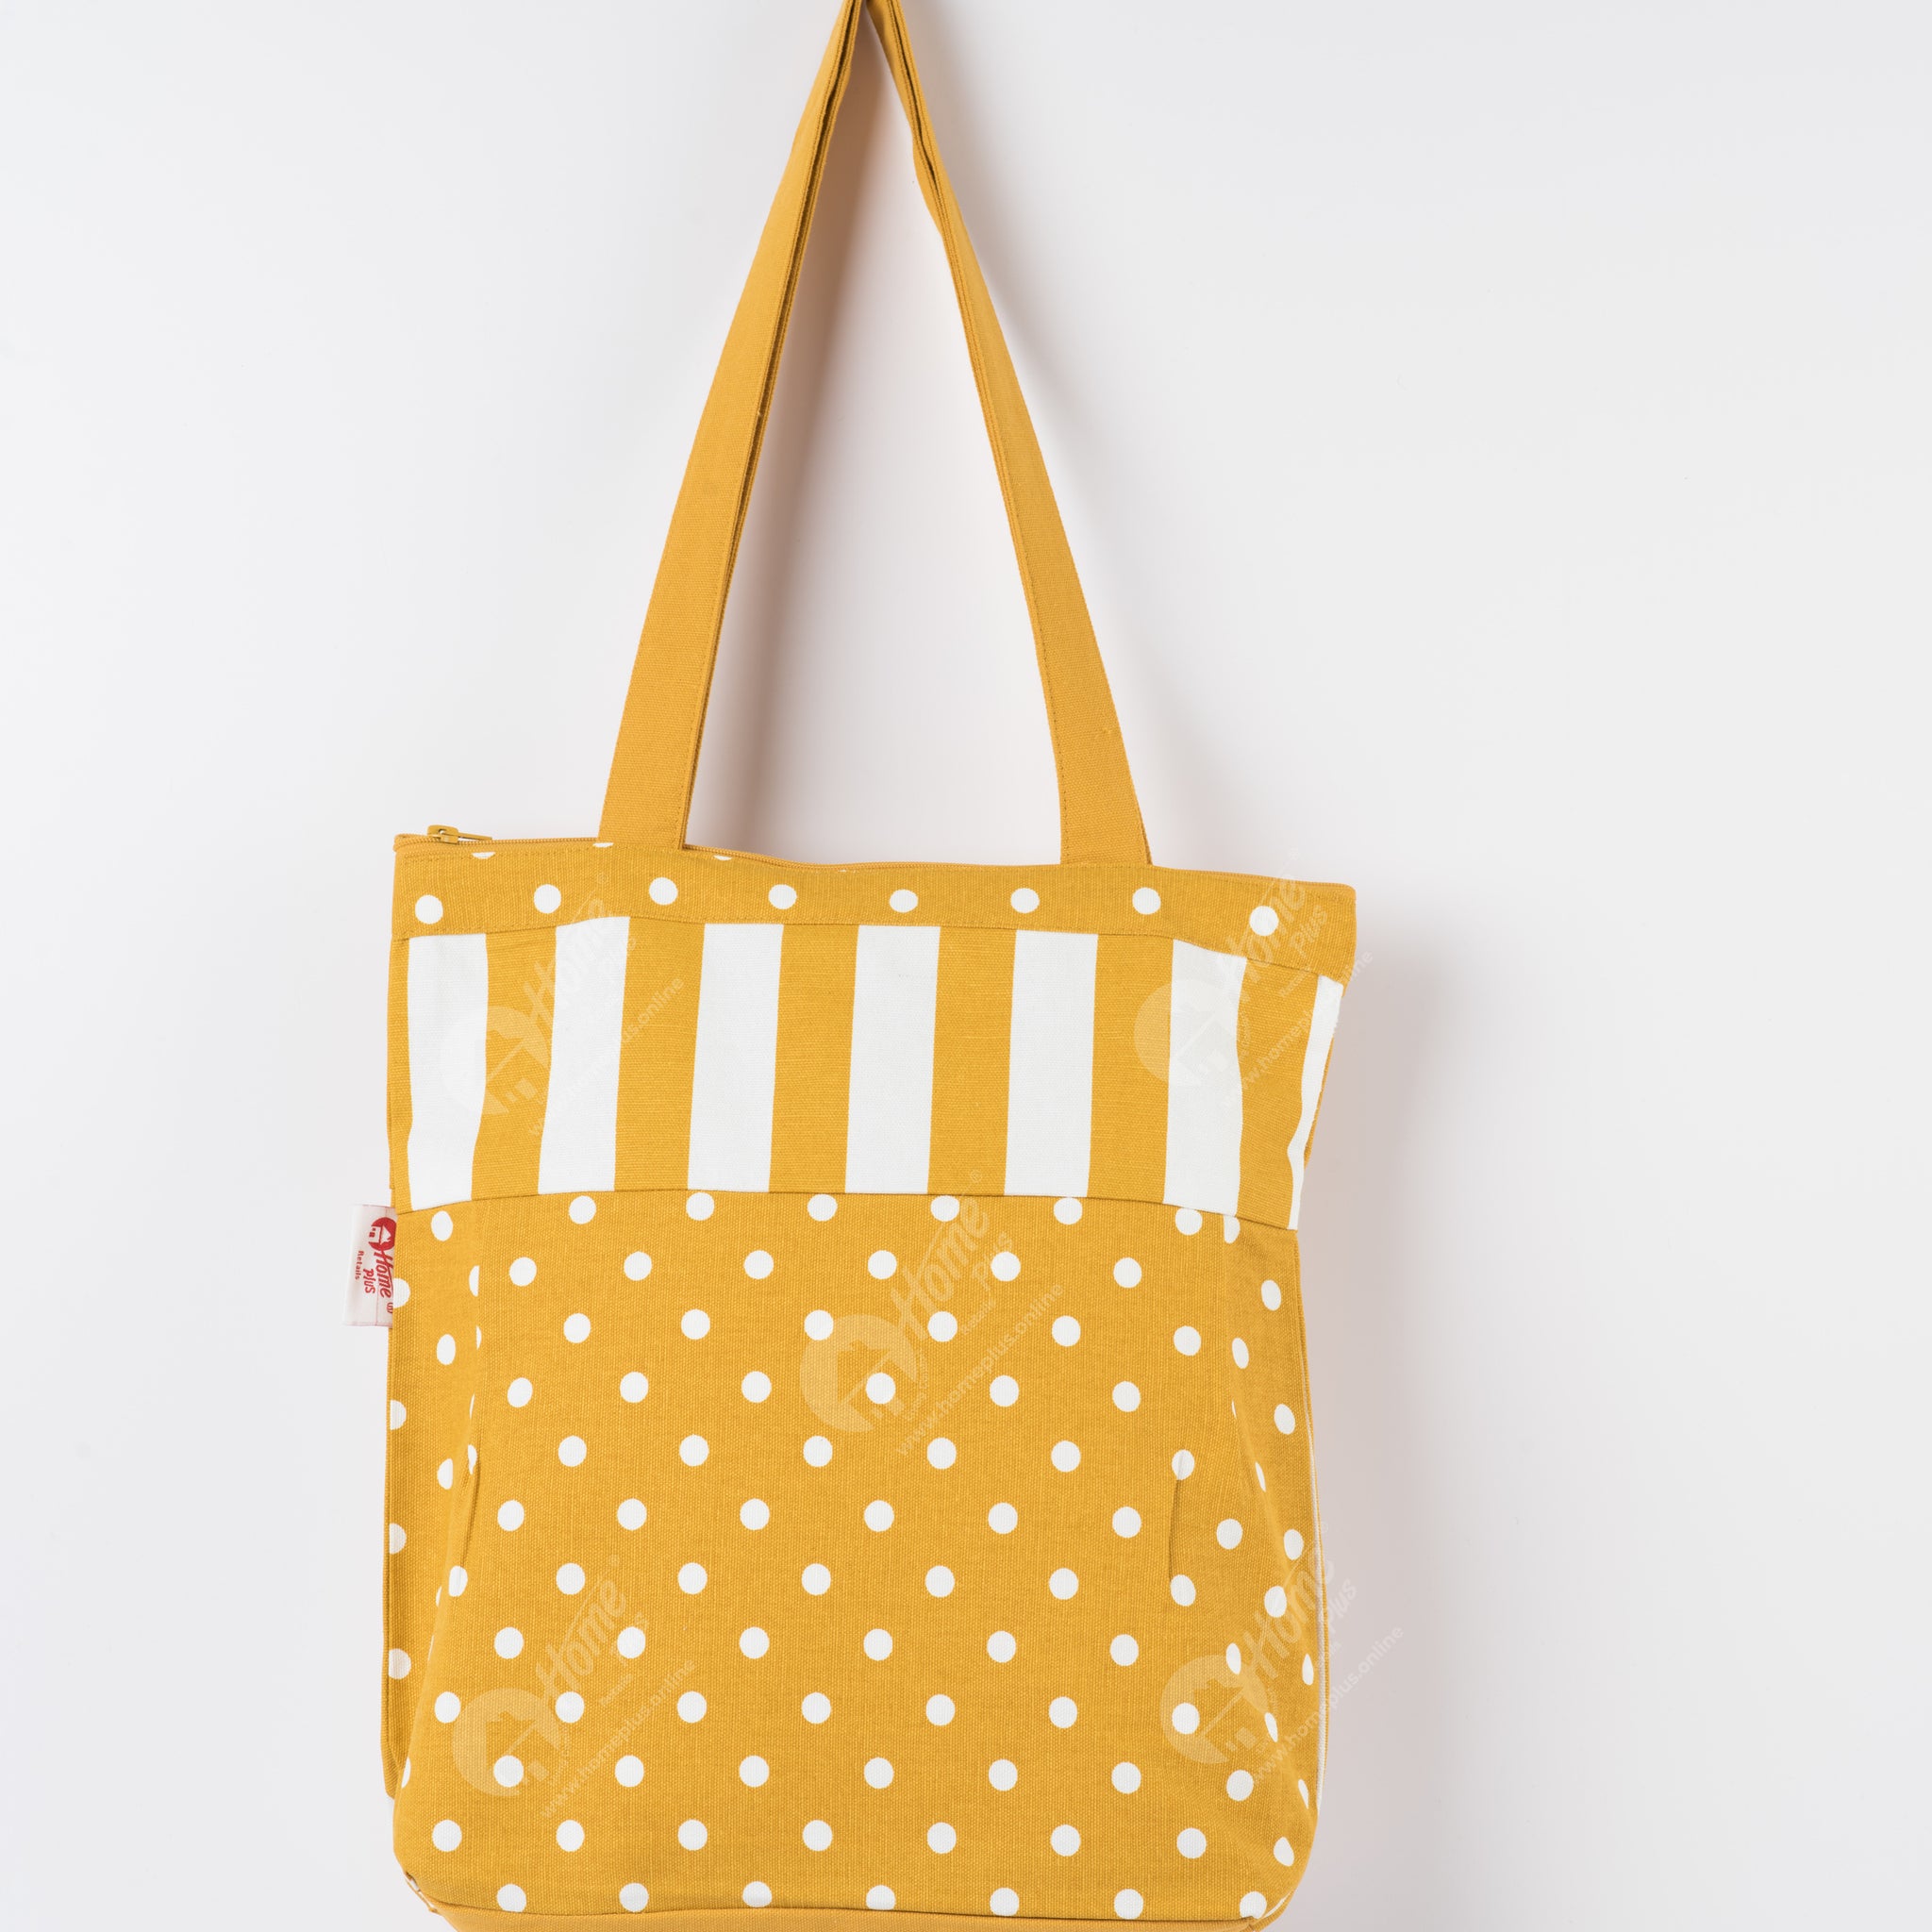 Shopping Bag - Polka Dot Mustard